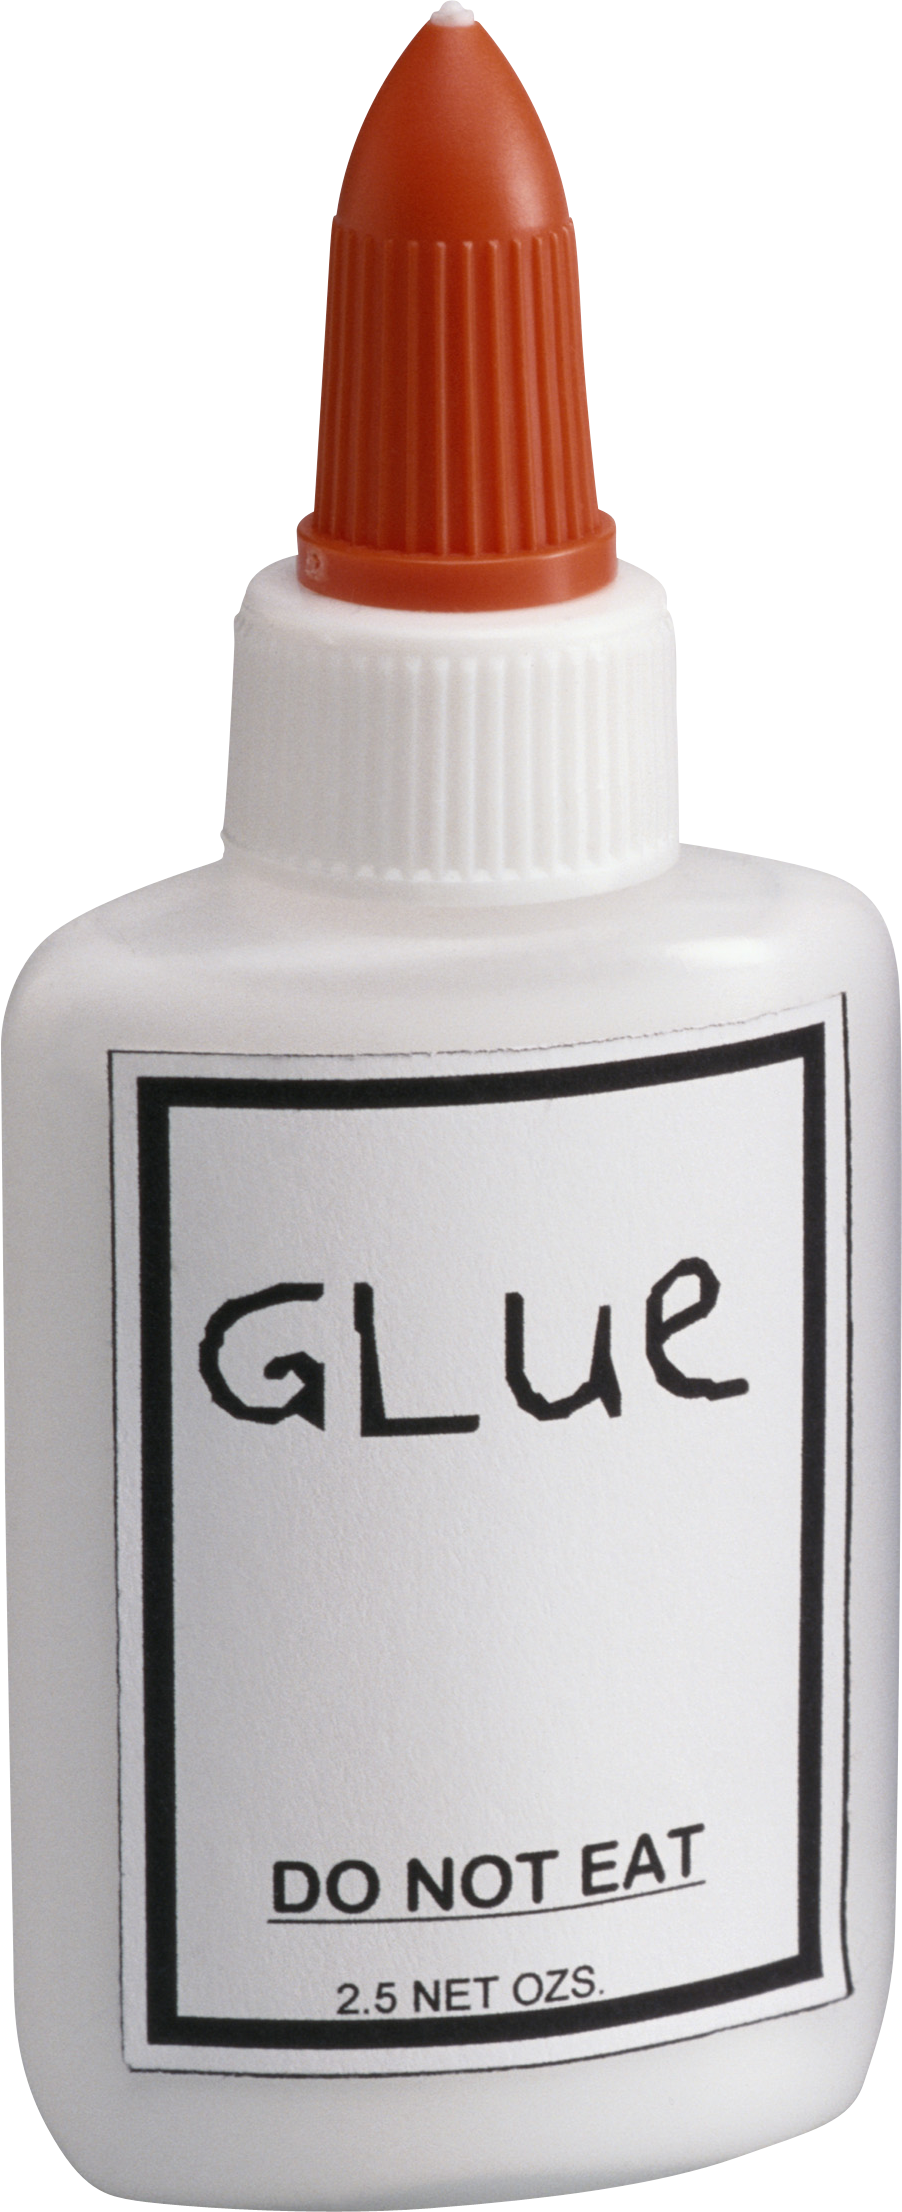 Glue PNG image free Download 